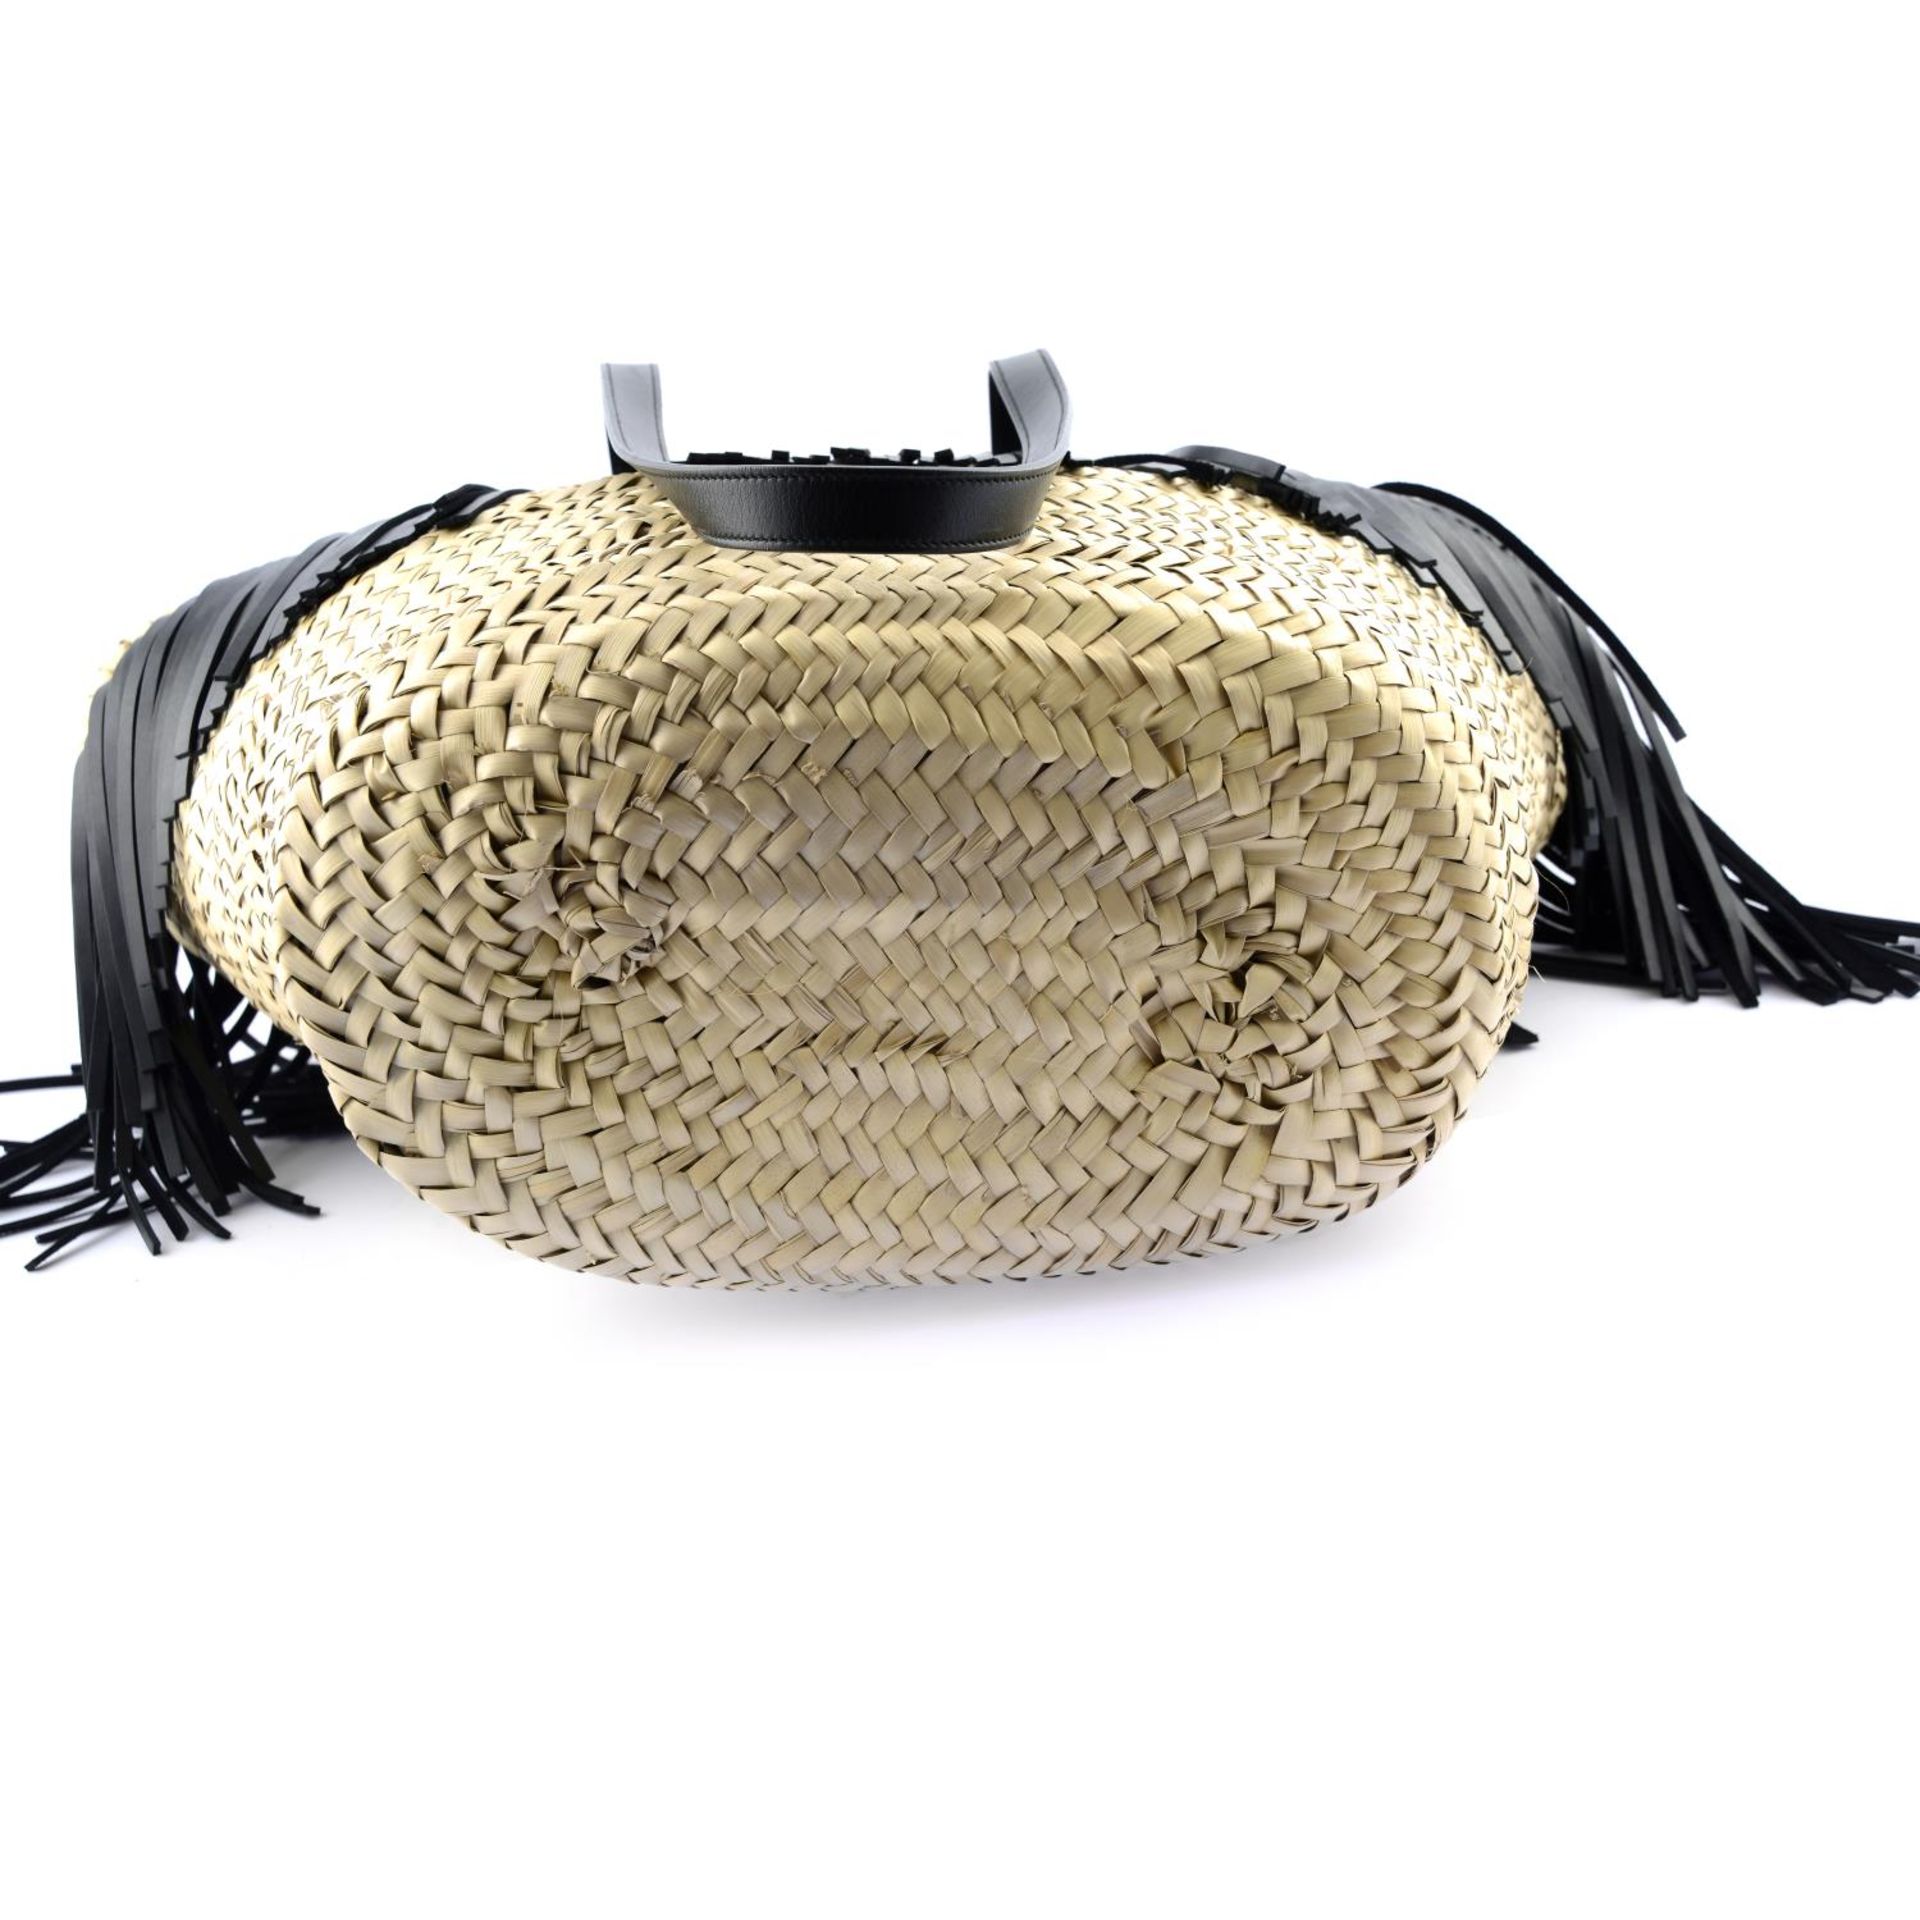 YVES SAINT LAURENT - a large woven Raffia Panier Basket handbag. - Image 4 of 5